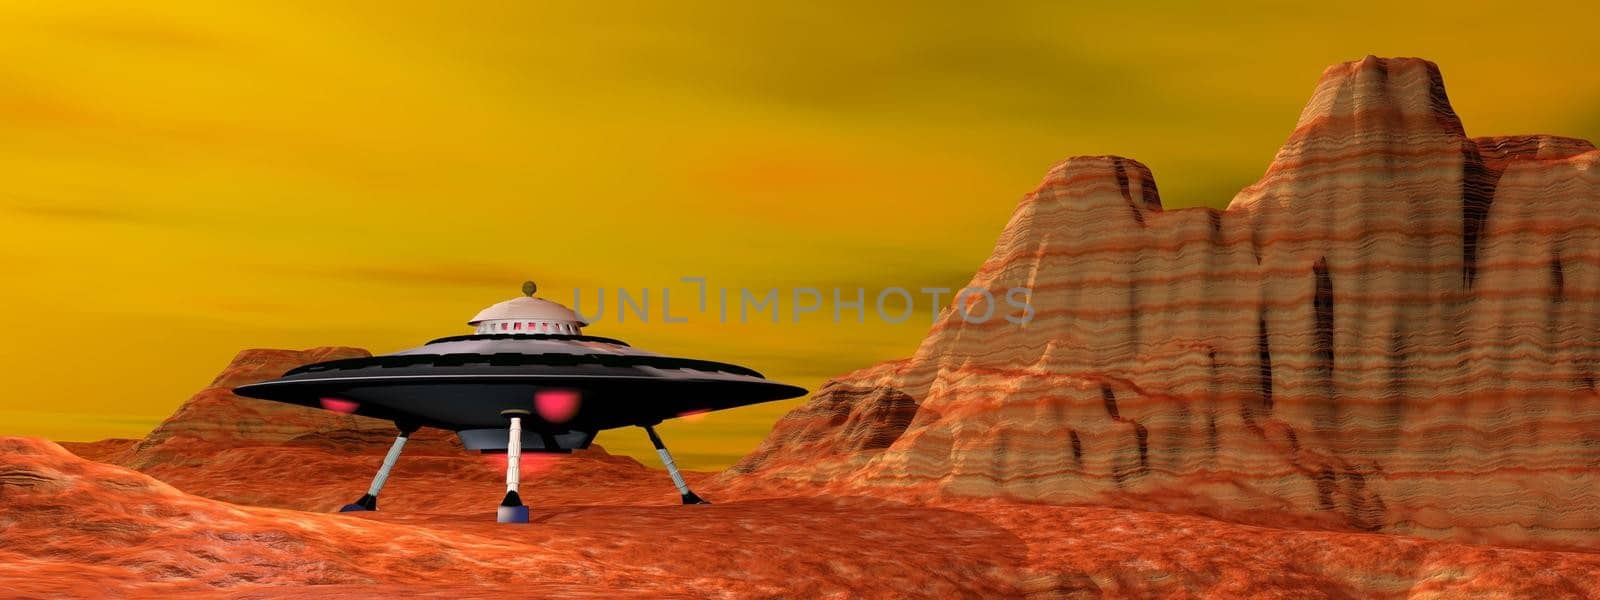 UFO landed - 3D render by Elenaphotos21